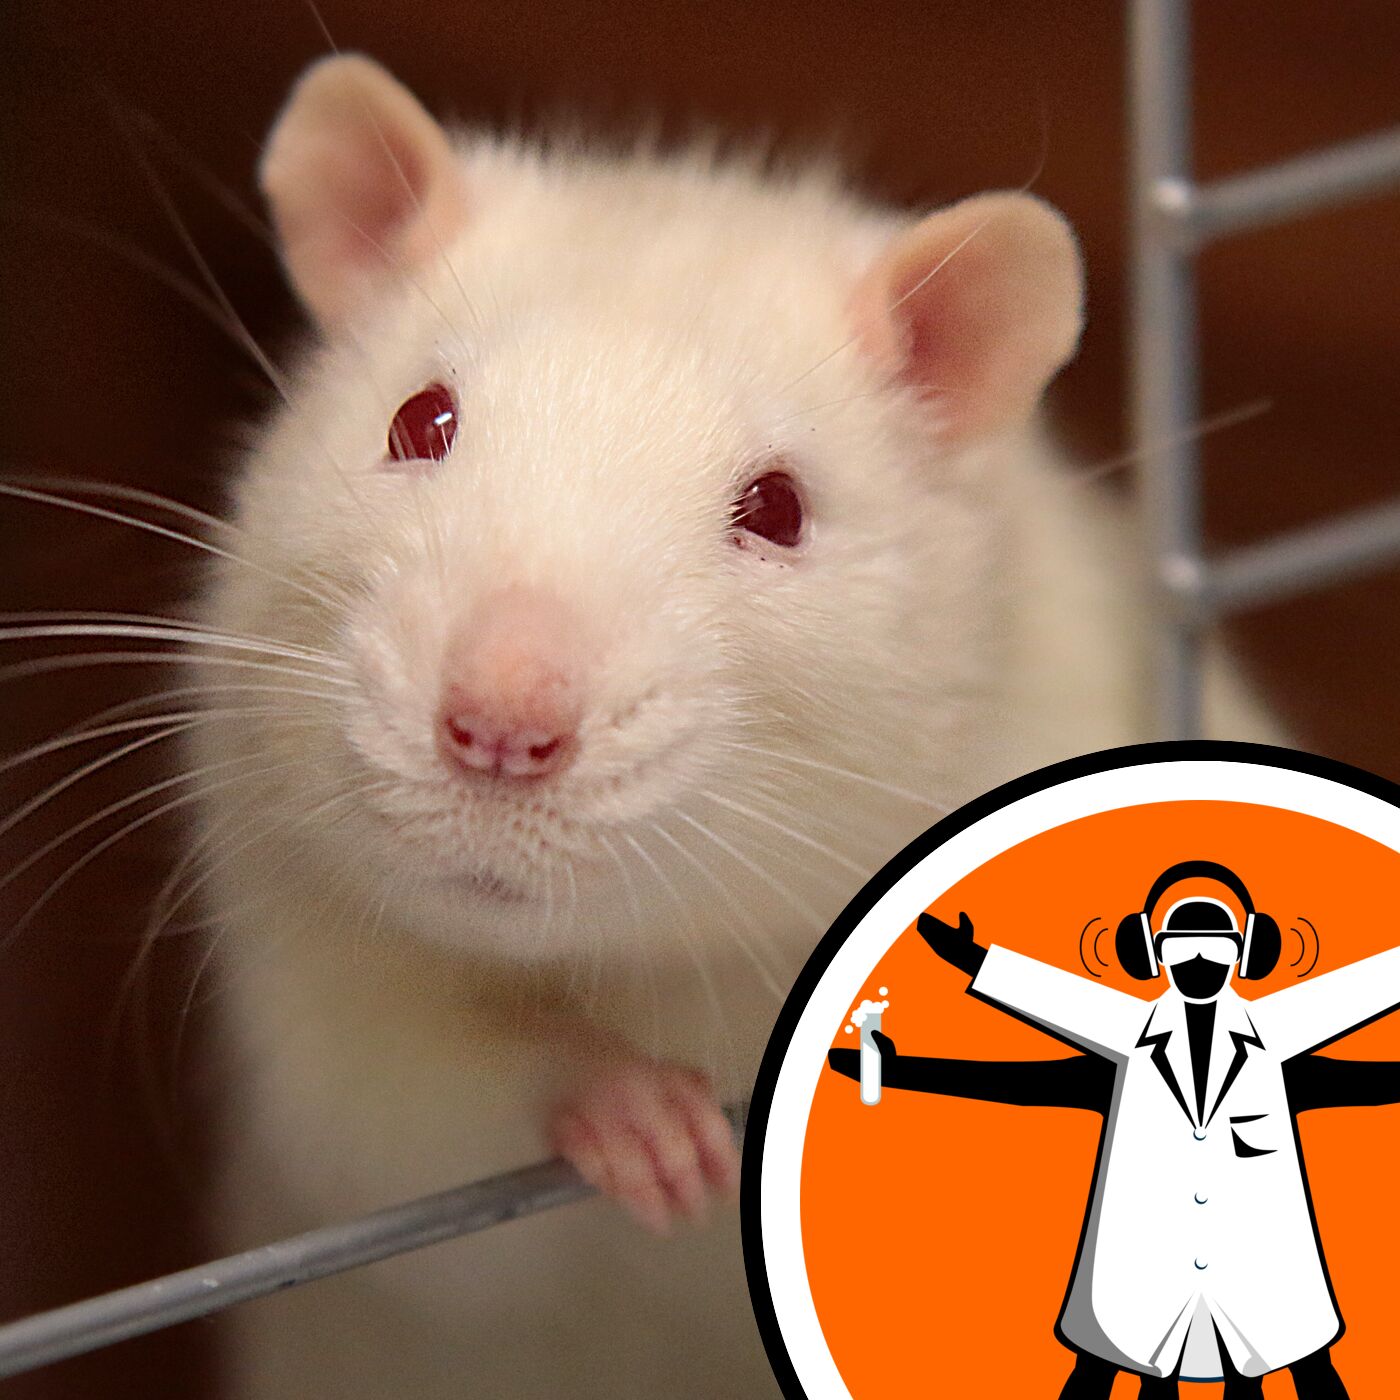 Mini human livers transplanted into rats